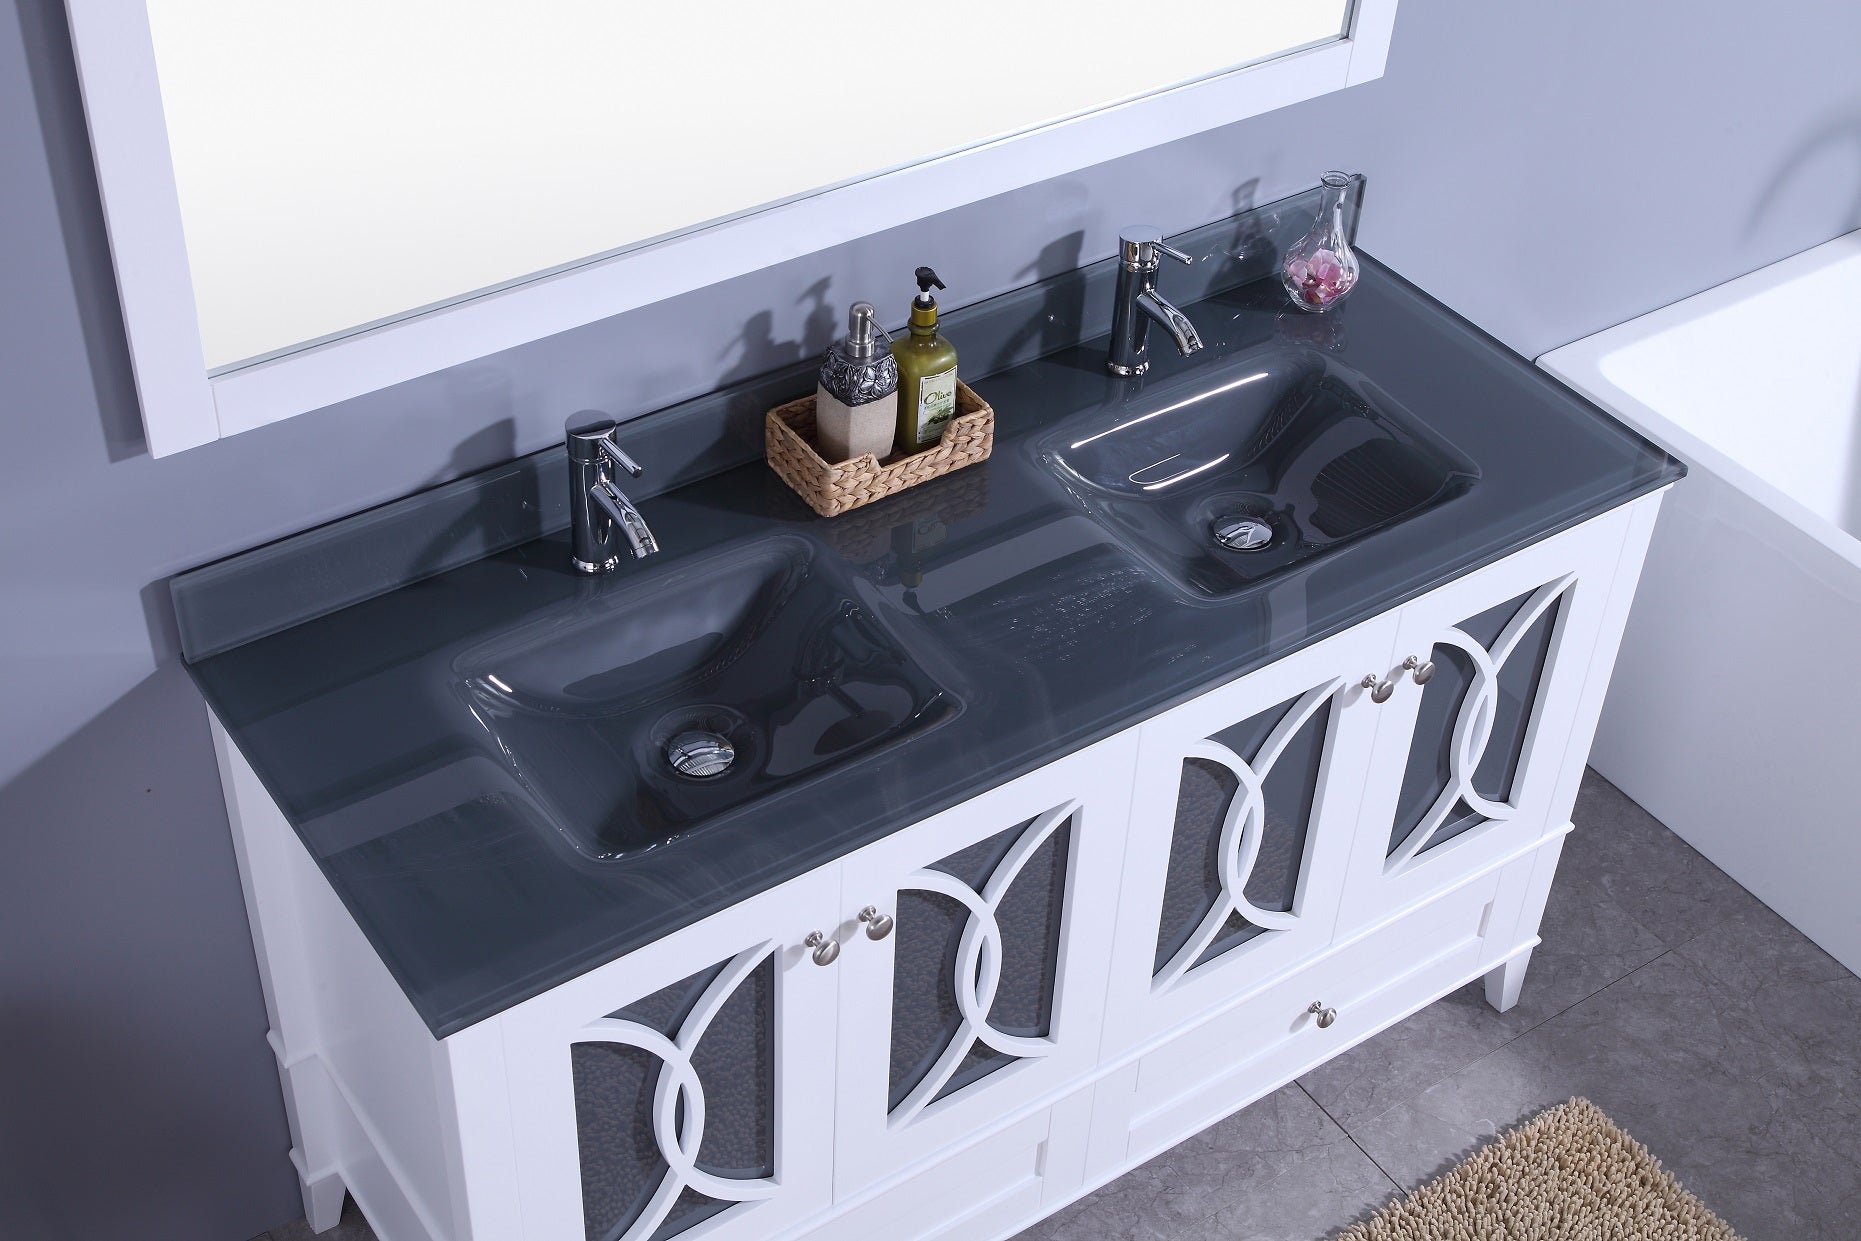 Legion Furniture 60" Bathroom Vanity, Mirror & Double Sinks WT7460 (60" x 22" x 35")